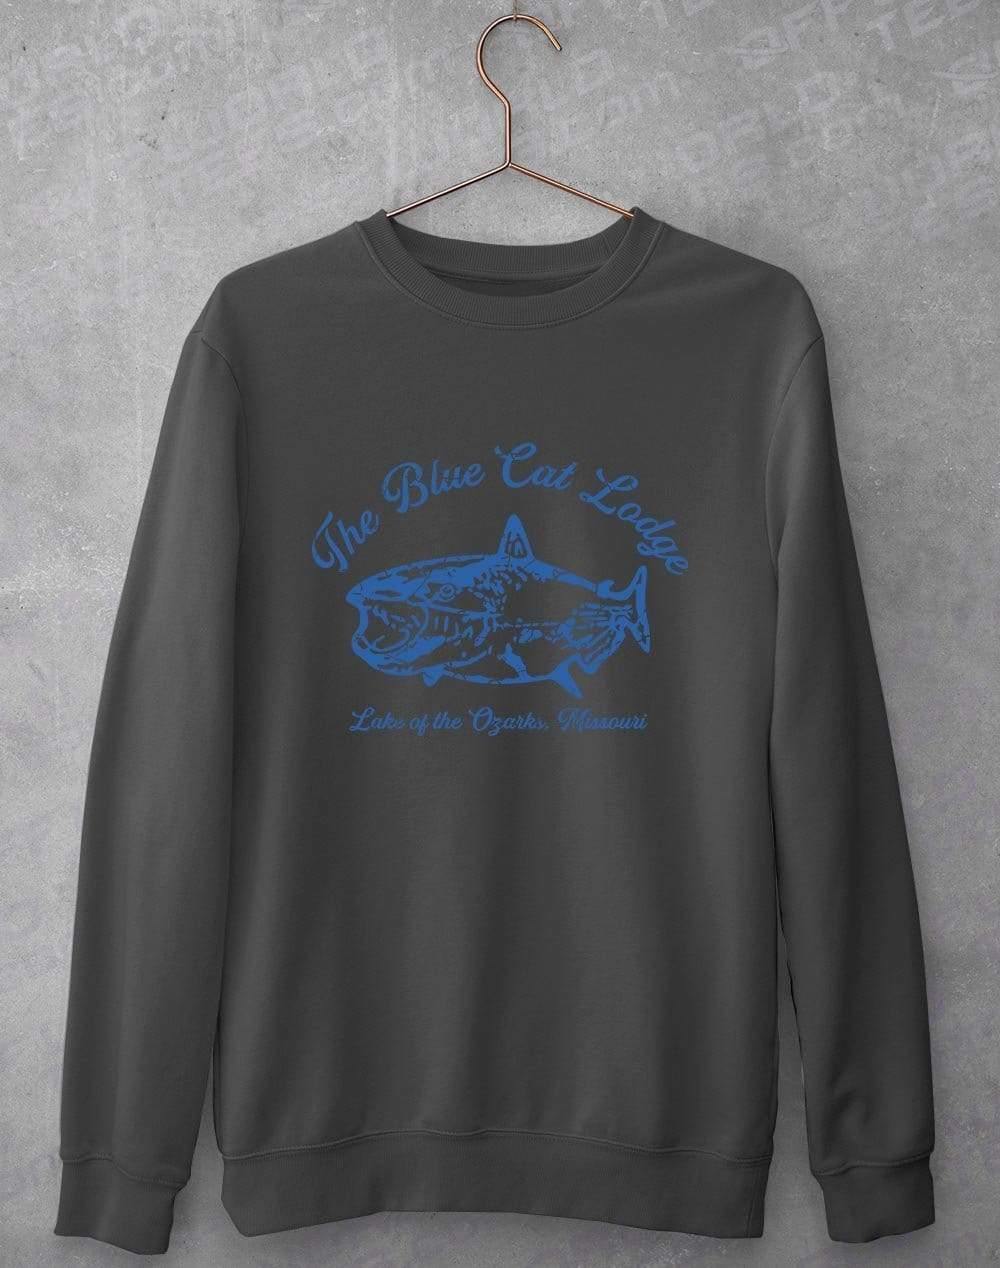 The Blue Cat Lodge Sweatshirt S / Charcoal  - Off World Tees